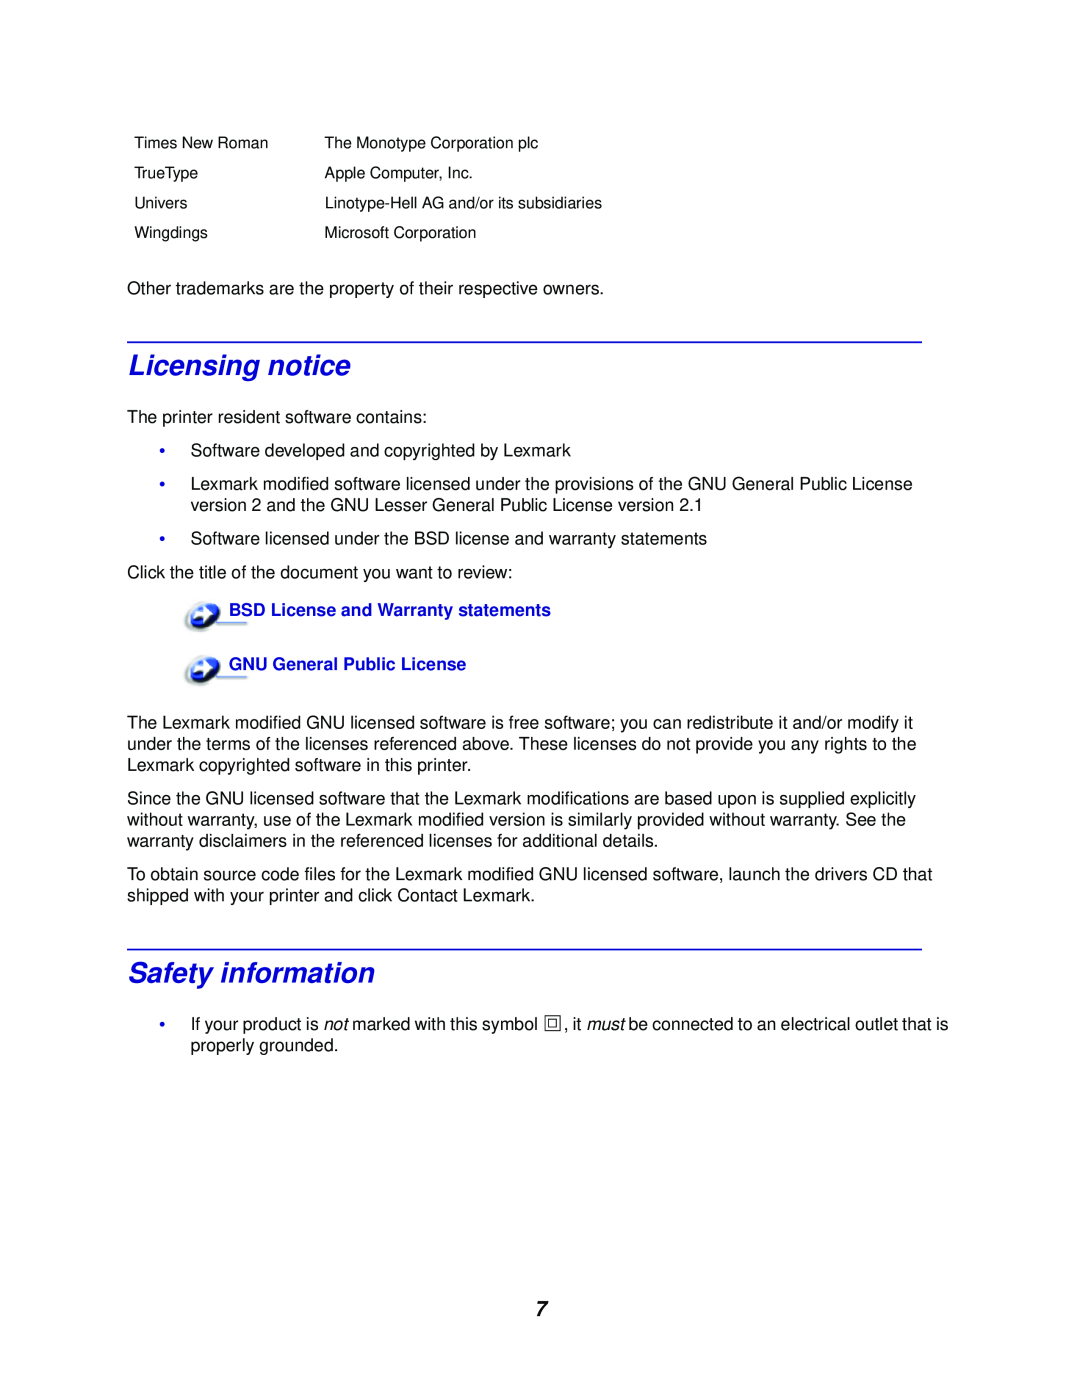 Lexmark 762 manual Licensing notice, Safety information, BSD License and Warranty statements, GNU General Public License 